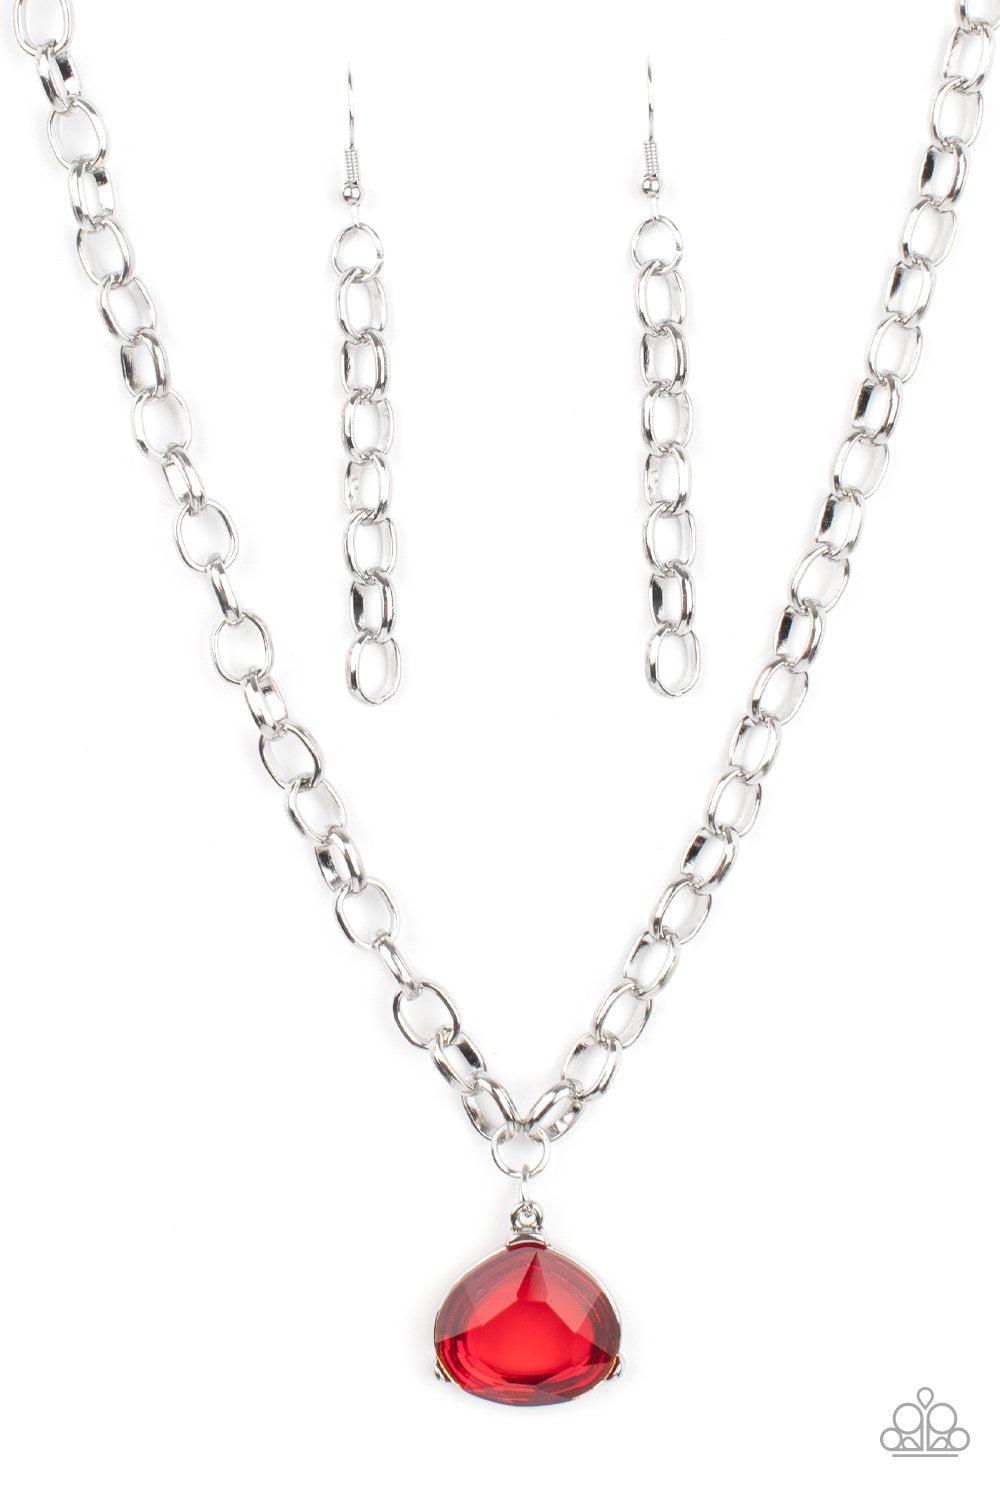 Gallery Gem Red Rhinestone Necklace - Paparazzi Accessories- lightbox - CarasShop.com - $5 Jewelry by Cara Jewels